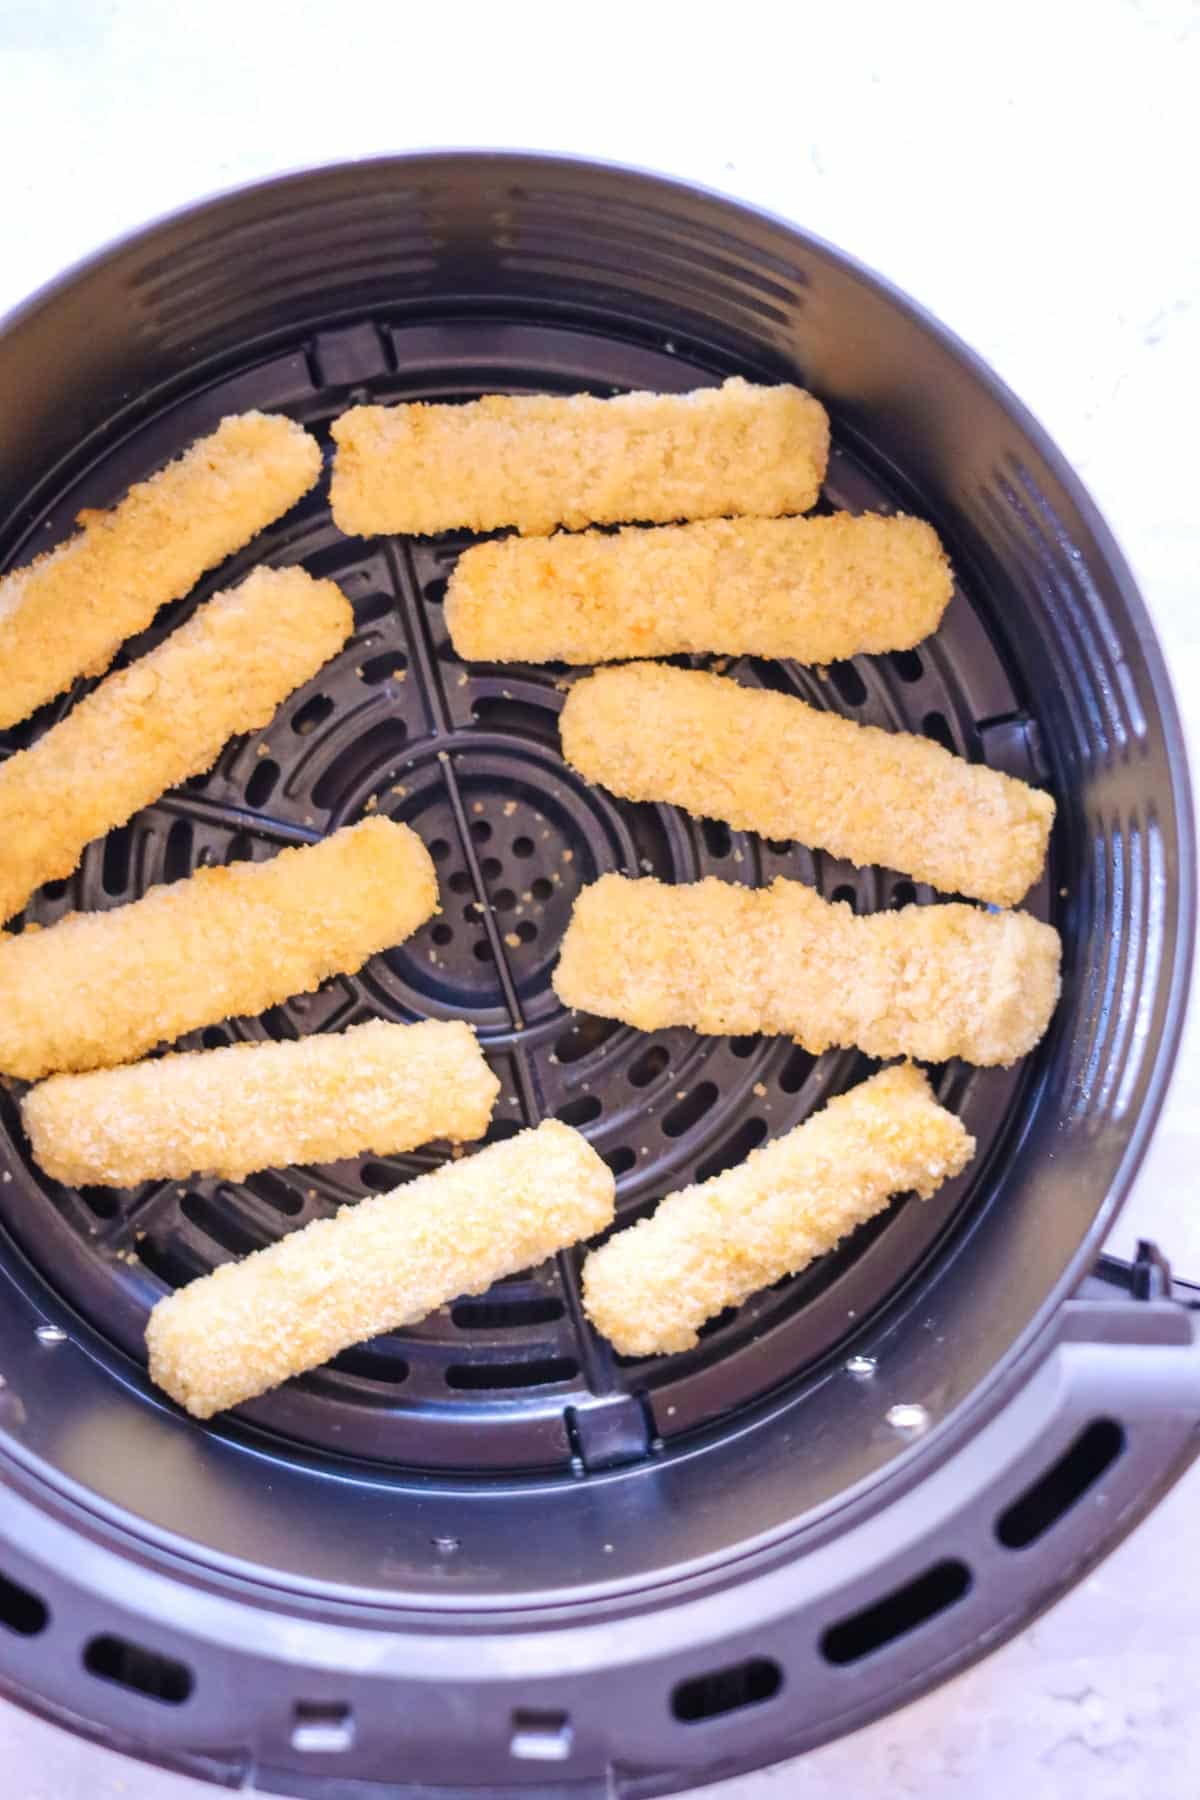 frozen fish sticks in an air fryer basket